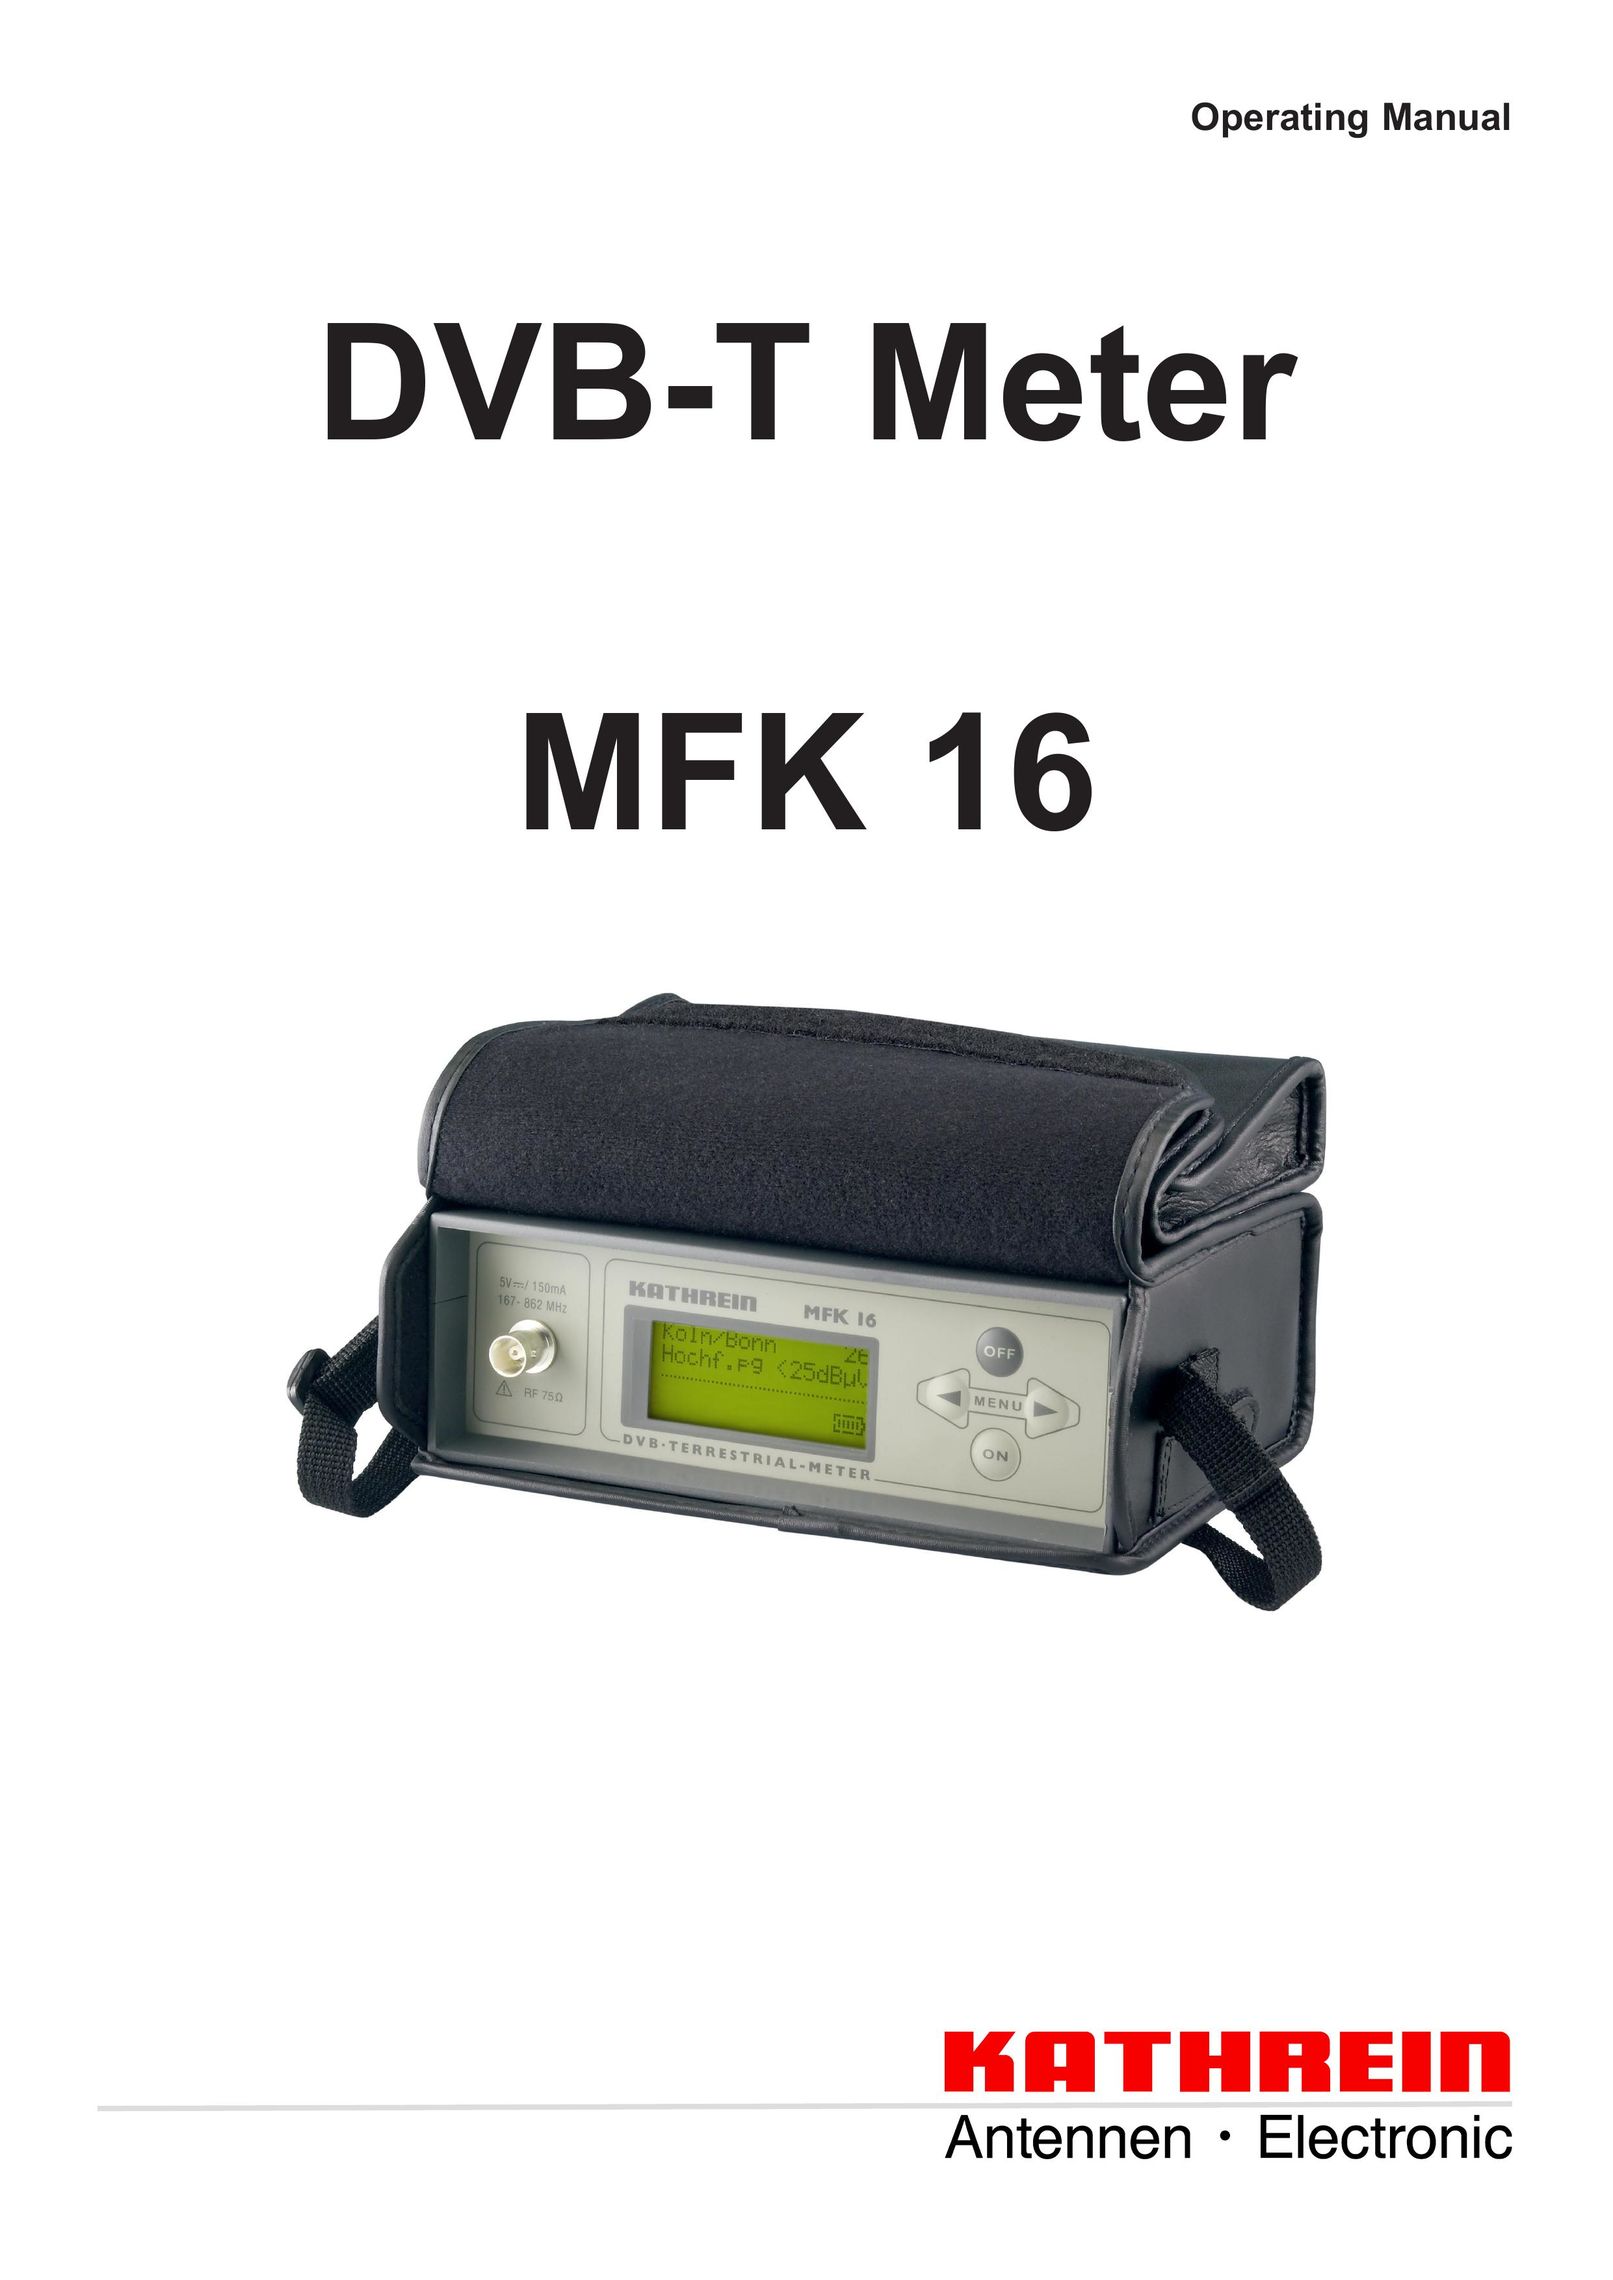 Kathrein MFK 16 Satellite TV System User Manual